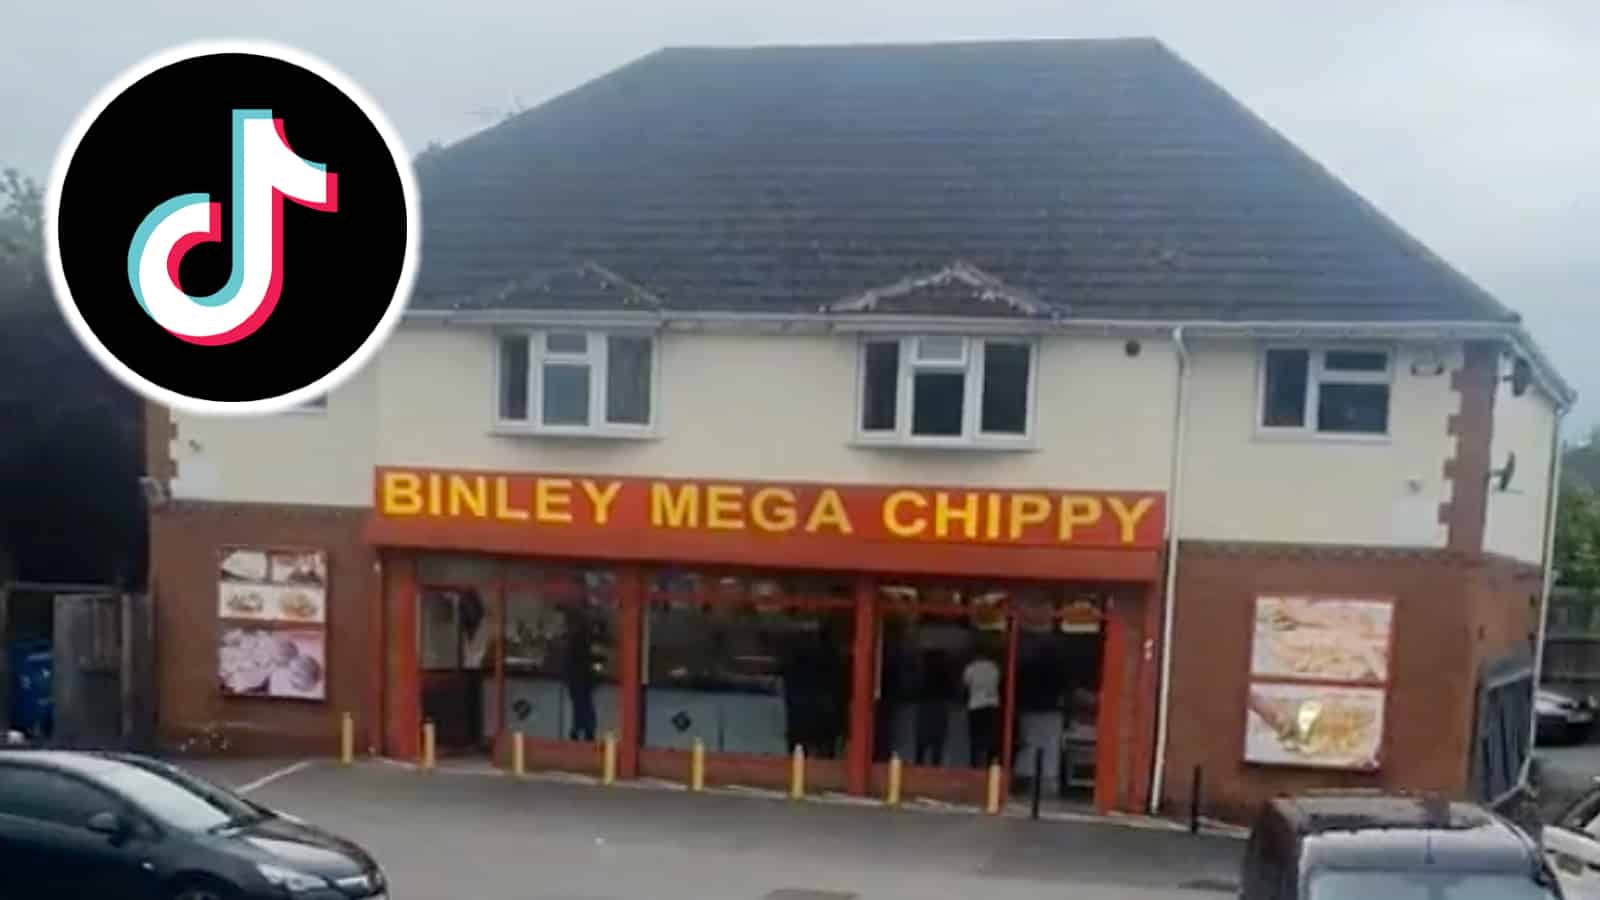 Binley Mega Chippy next to TikTok logo